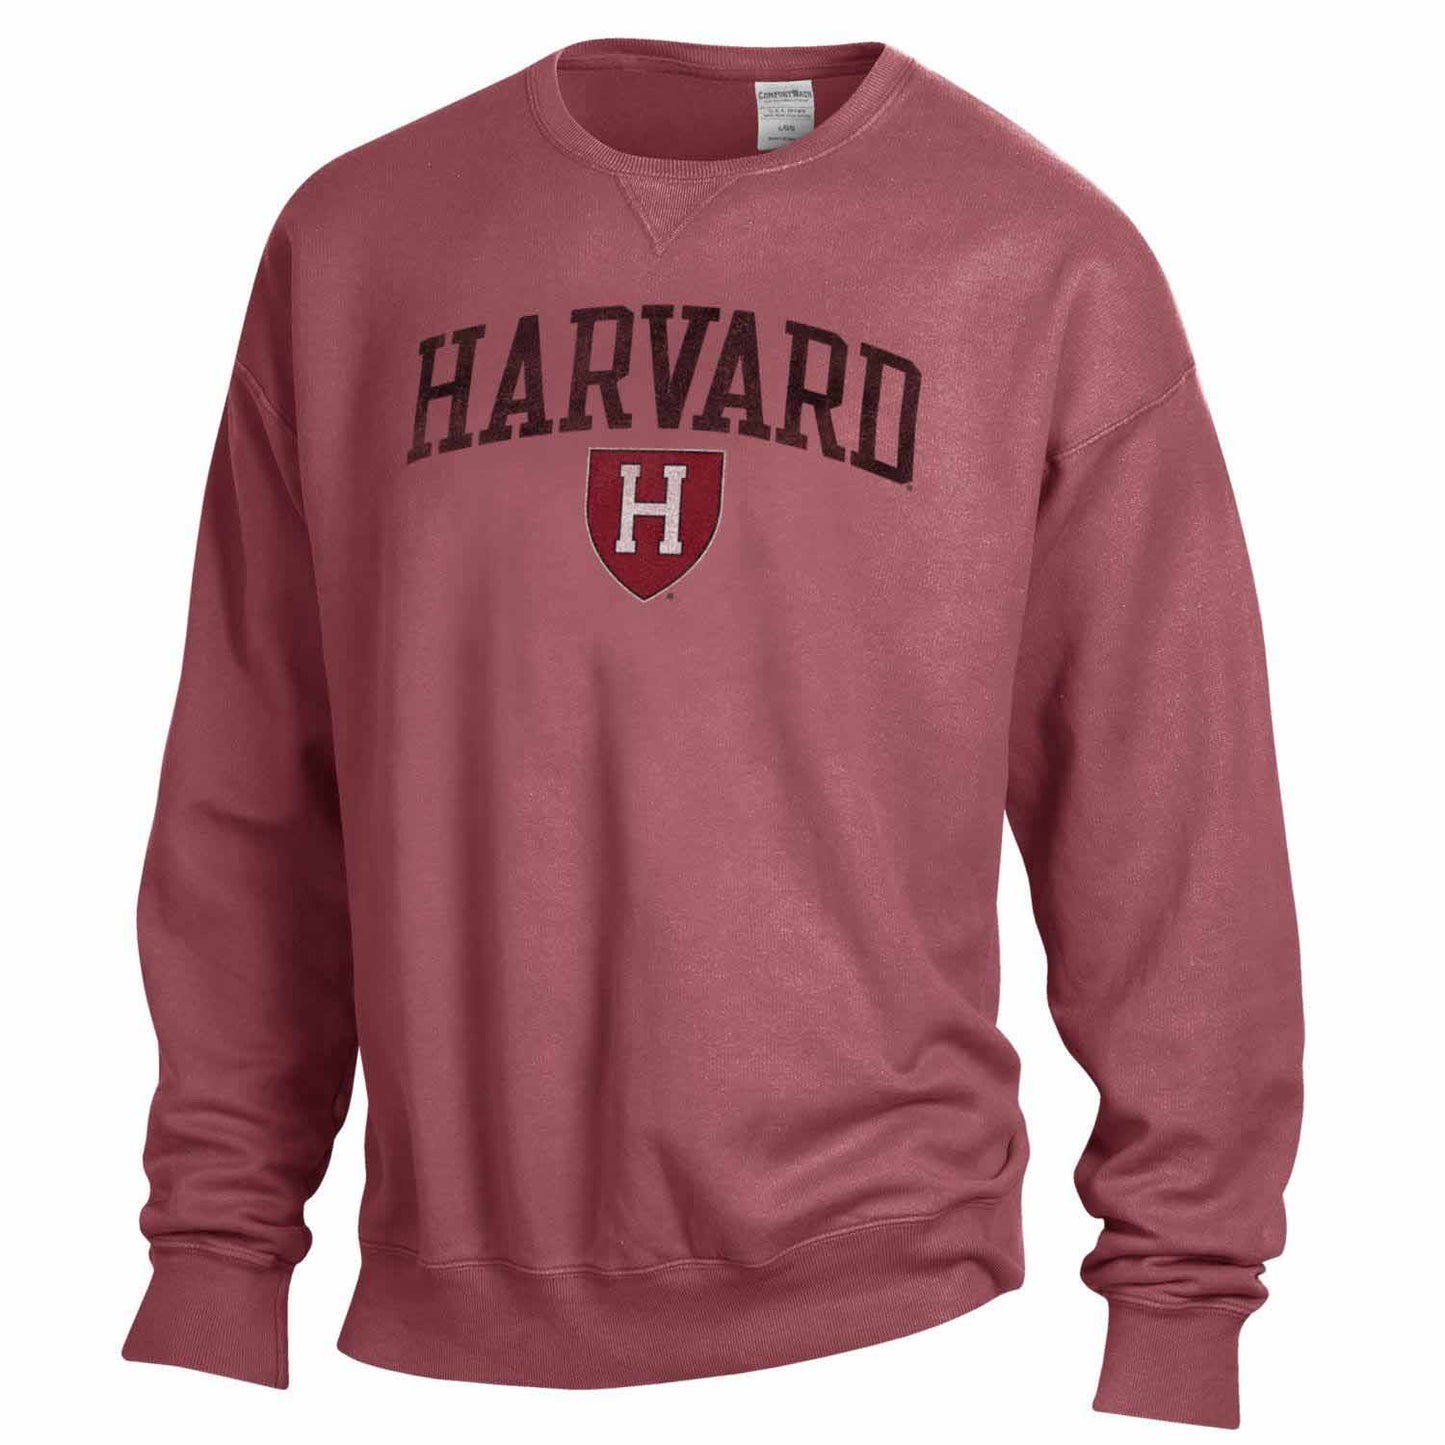 Harvard Crimson Adult Ultra Soft Comfort Wash Crewneck Sweatshirt - Maroon